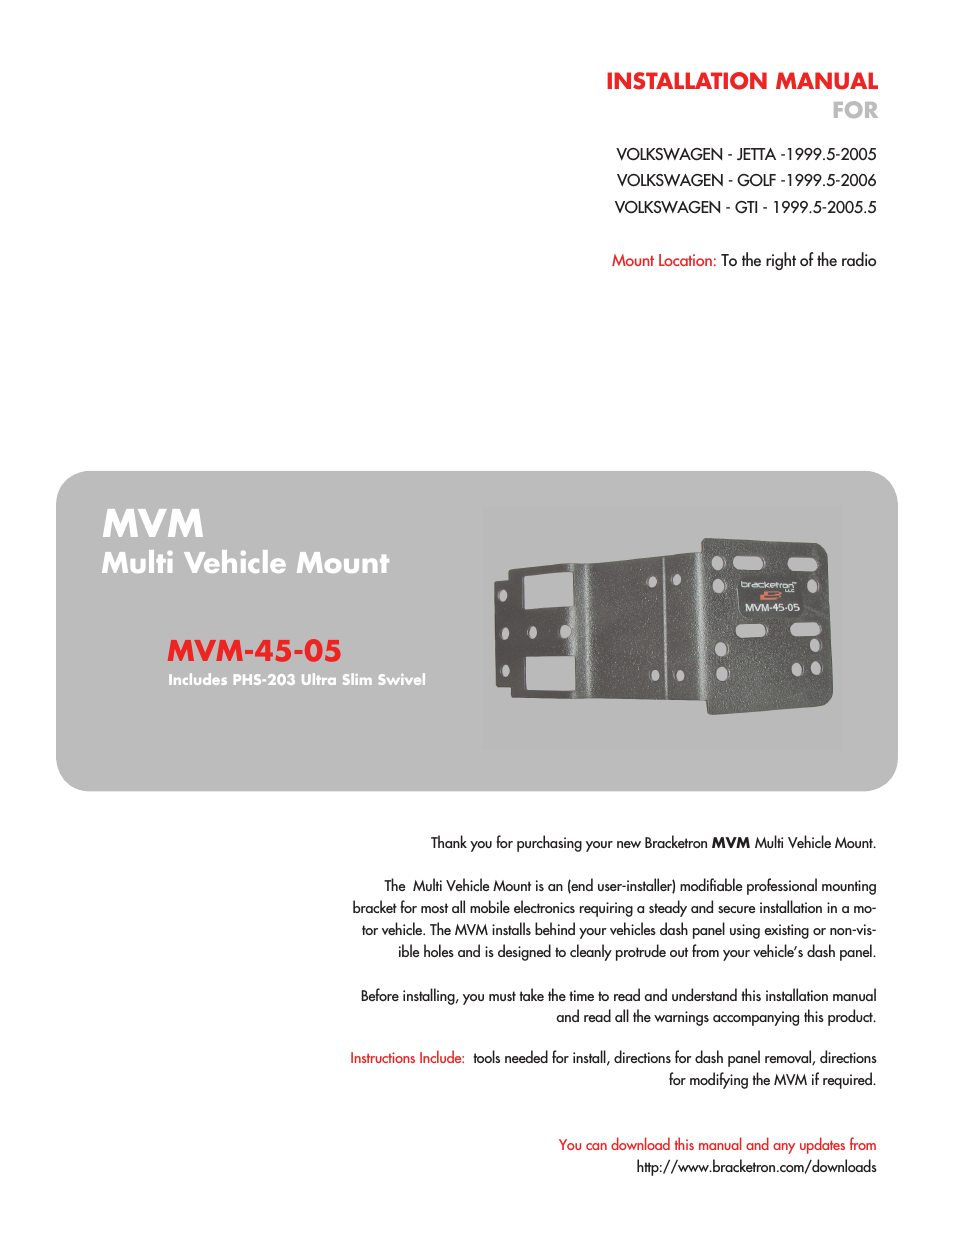 MULTI VEHICLE MOUNT MVM-45-05